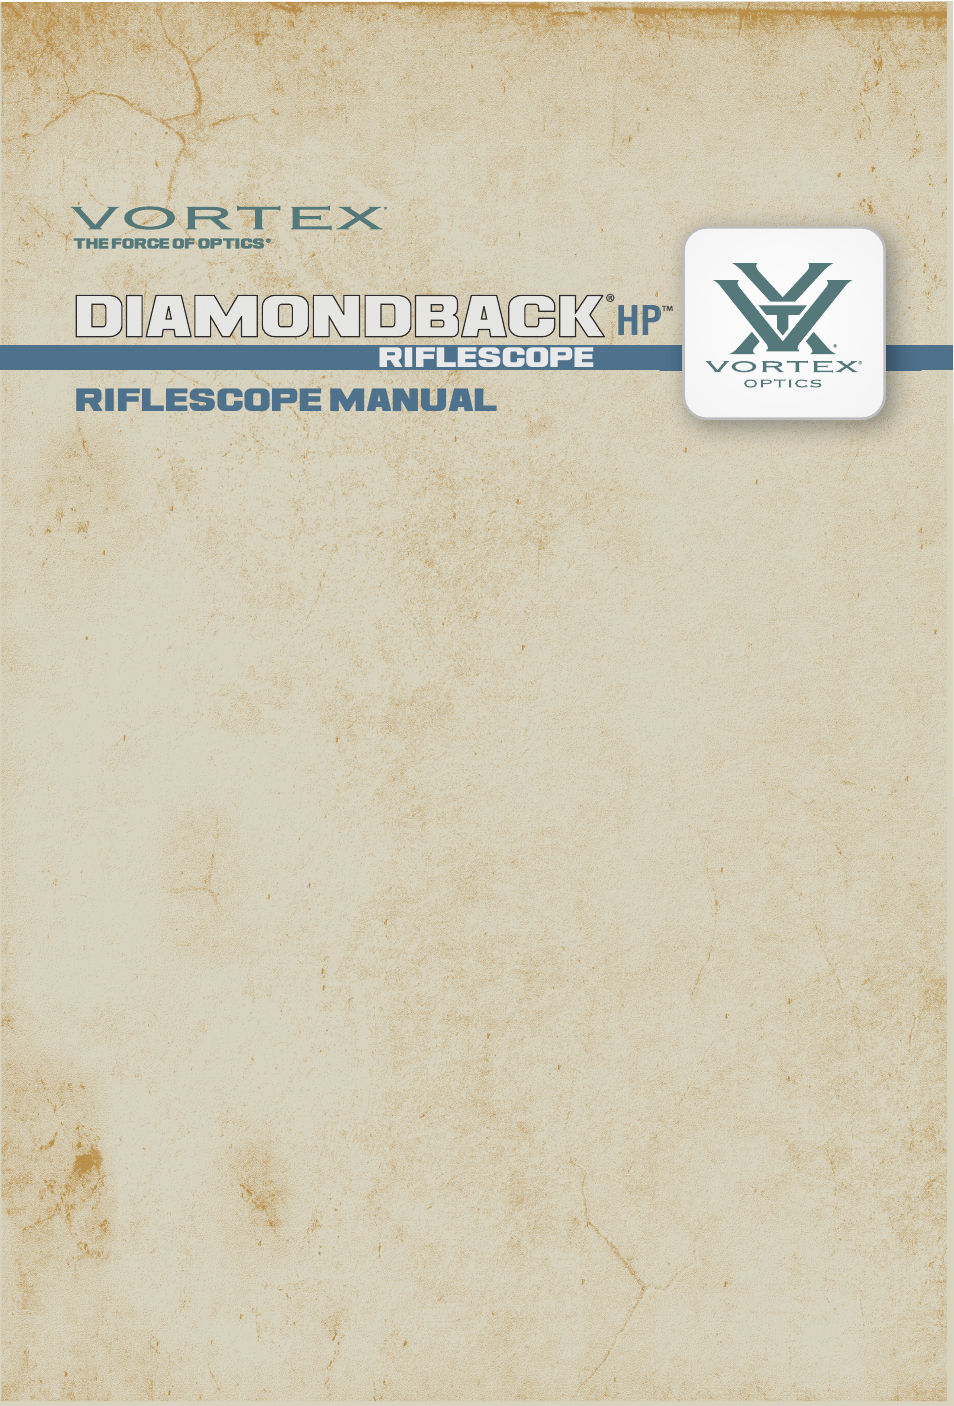 DIAMONDBACK HP 3-12X42 RIFLESCOPE